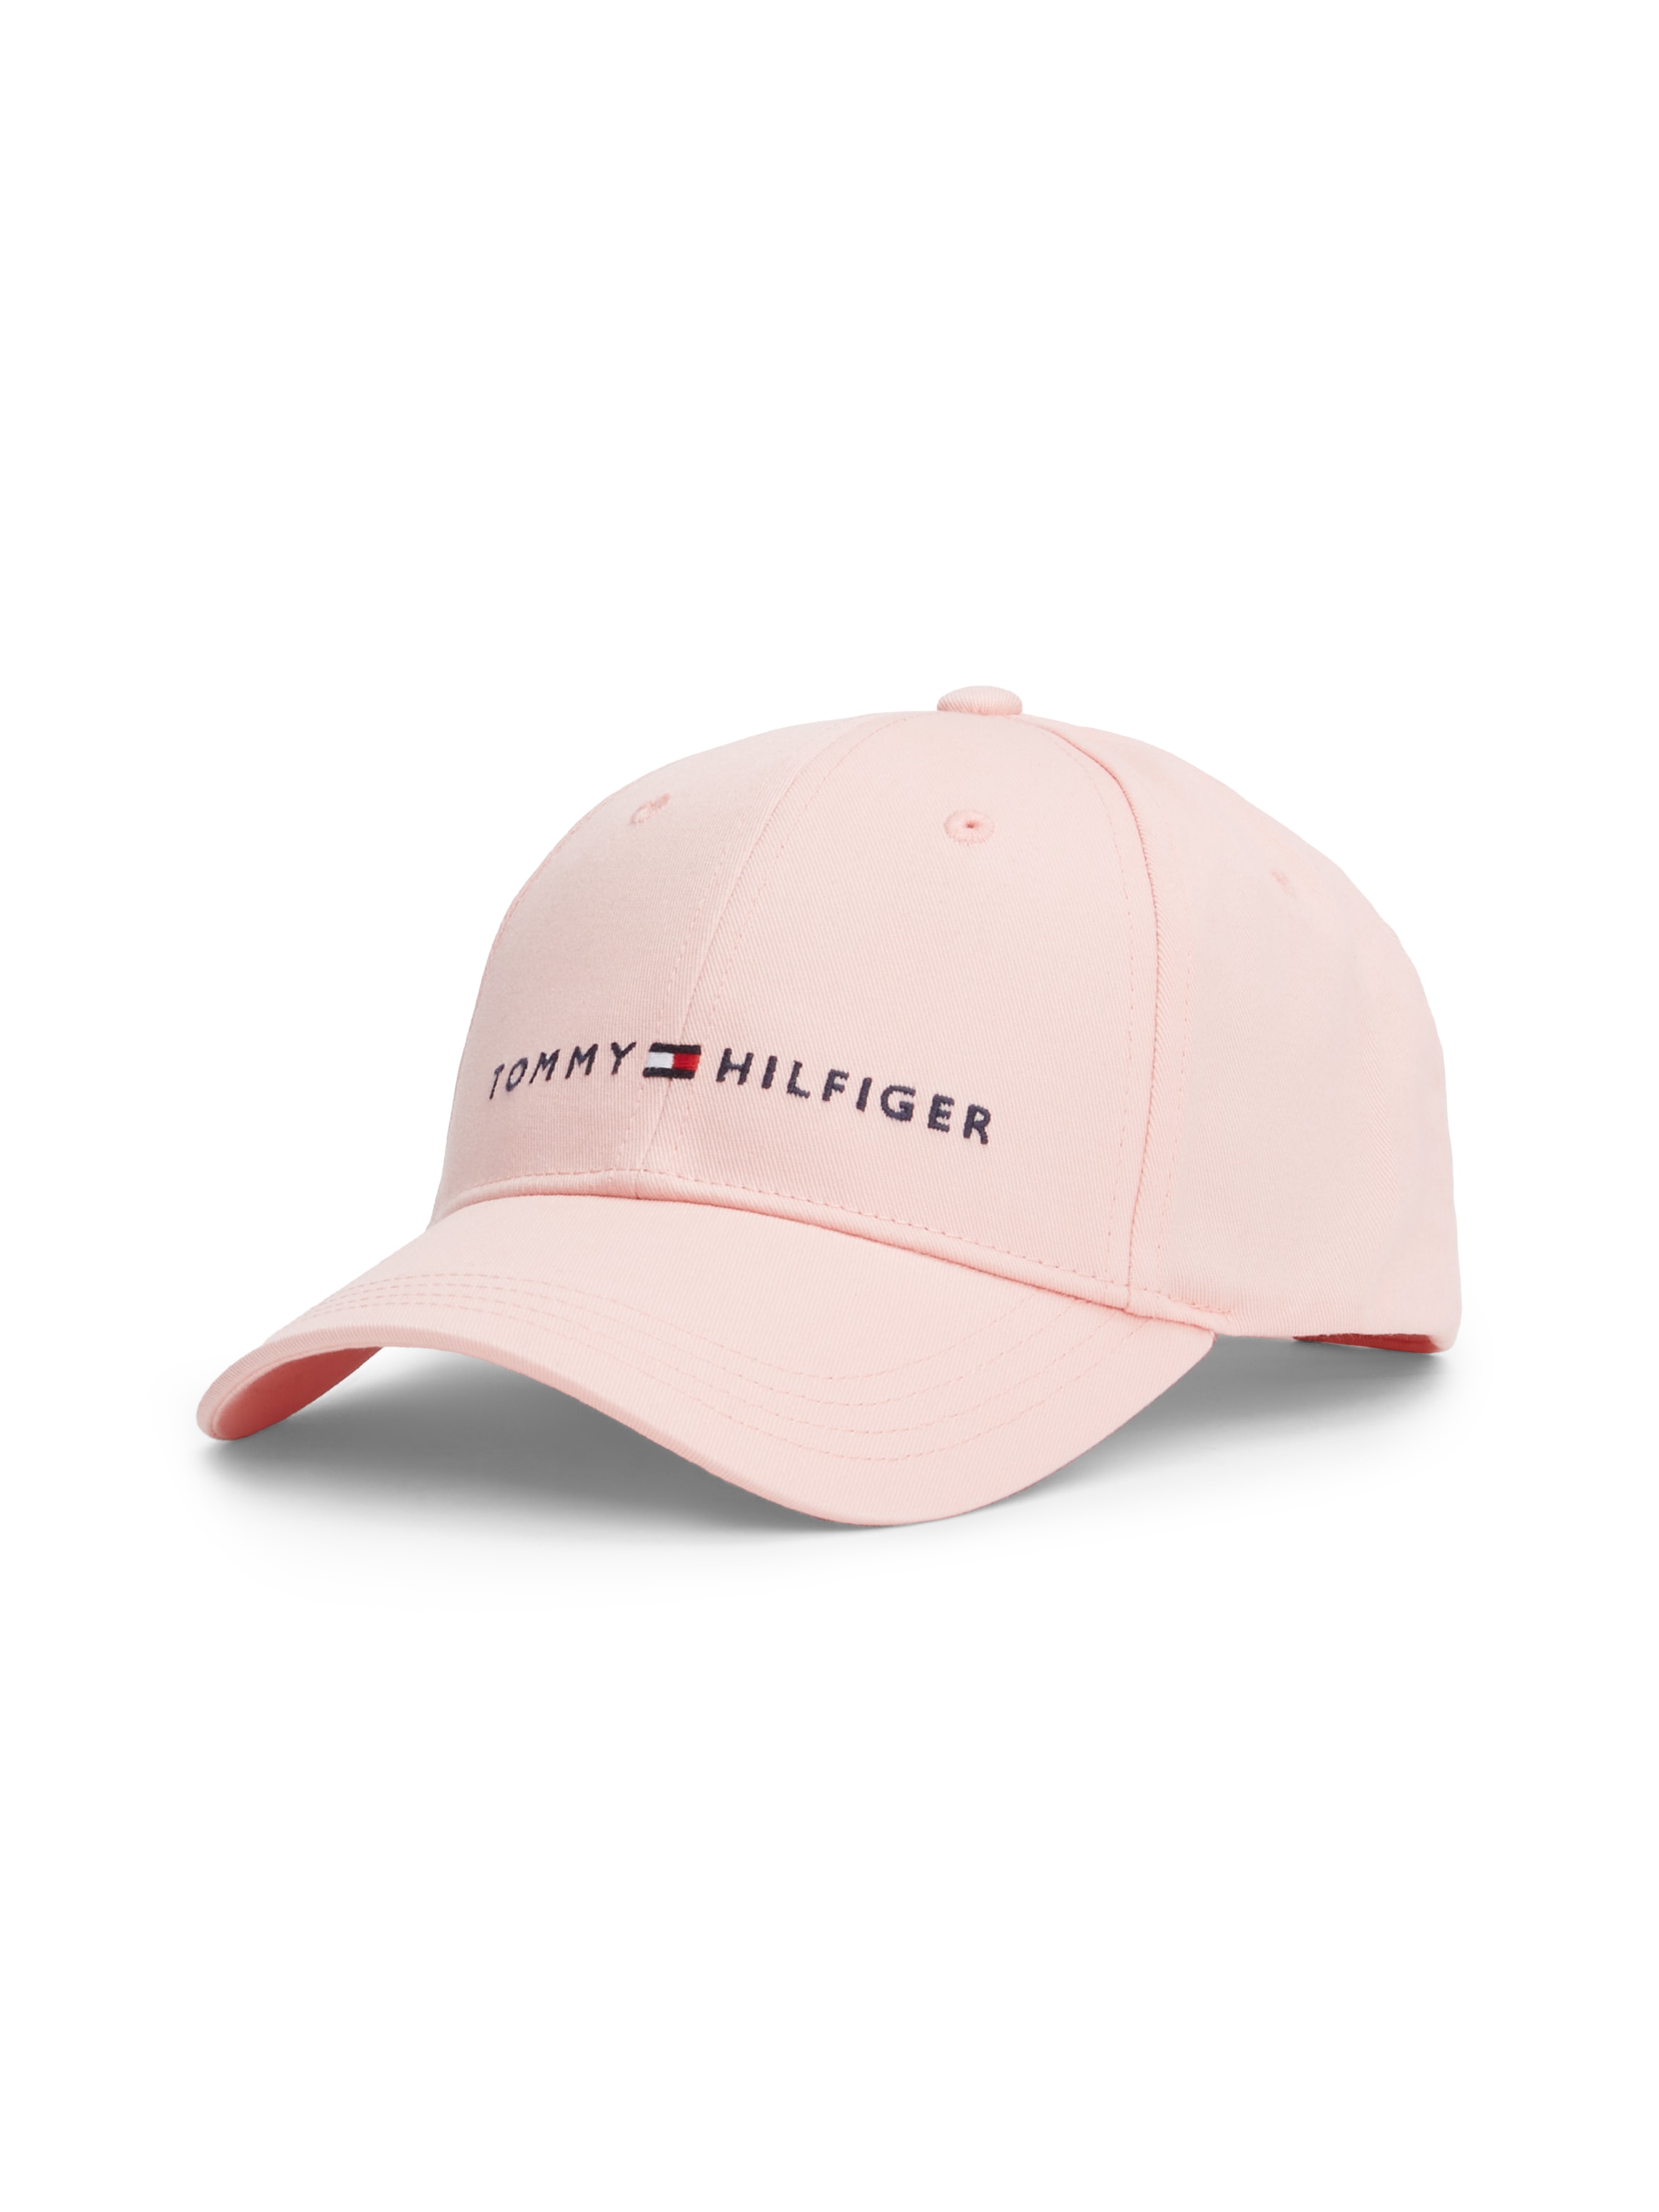 Tommy Hilfiger Snapback Cap »Essential Cap«, Kinder Essential verstellbare Cap mit Branding